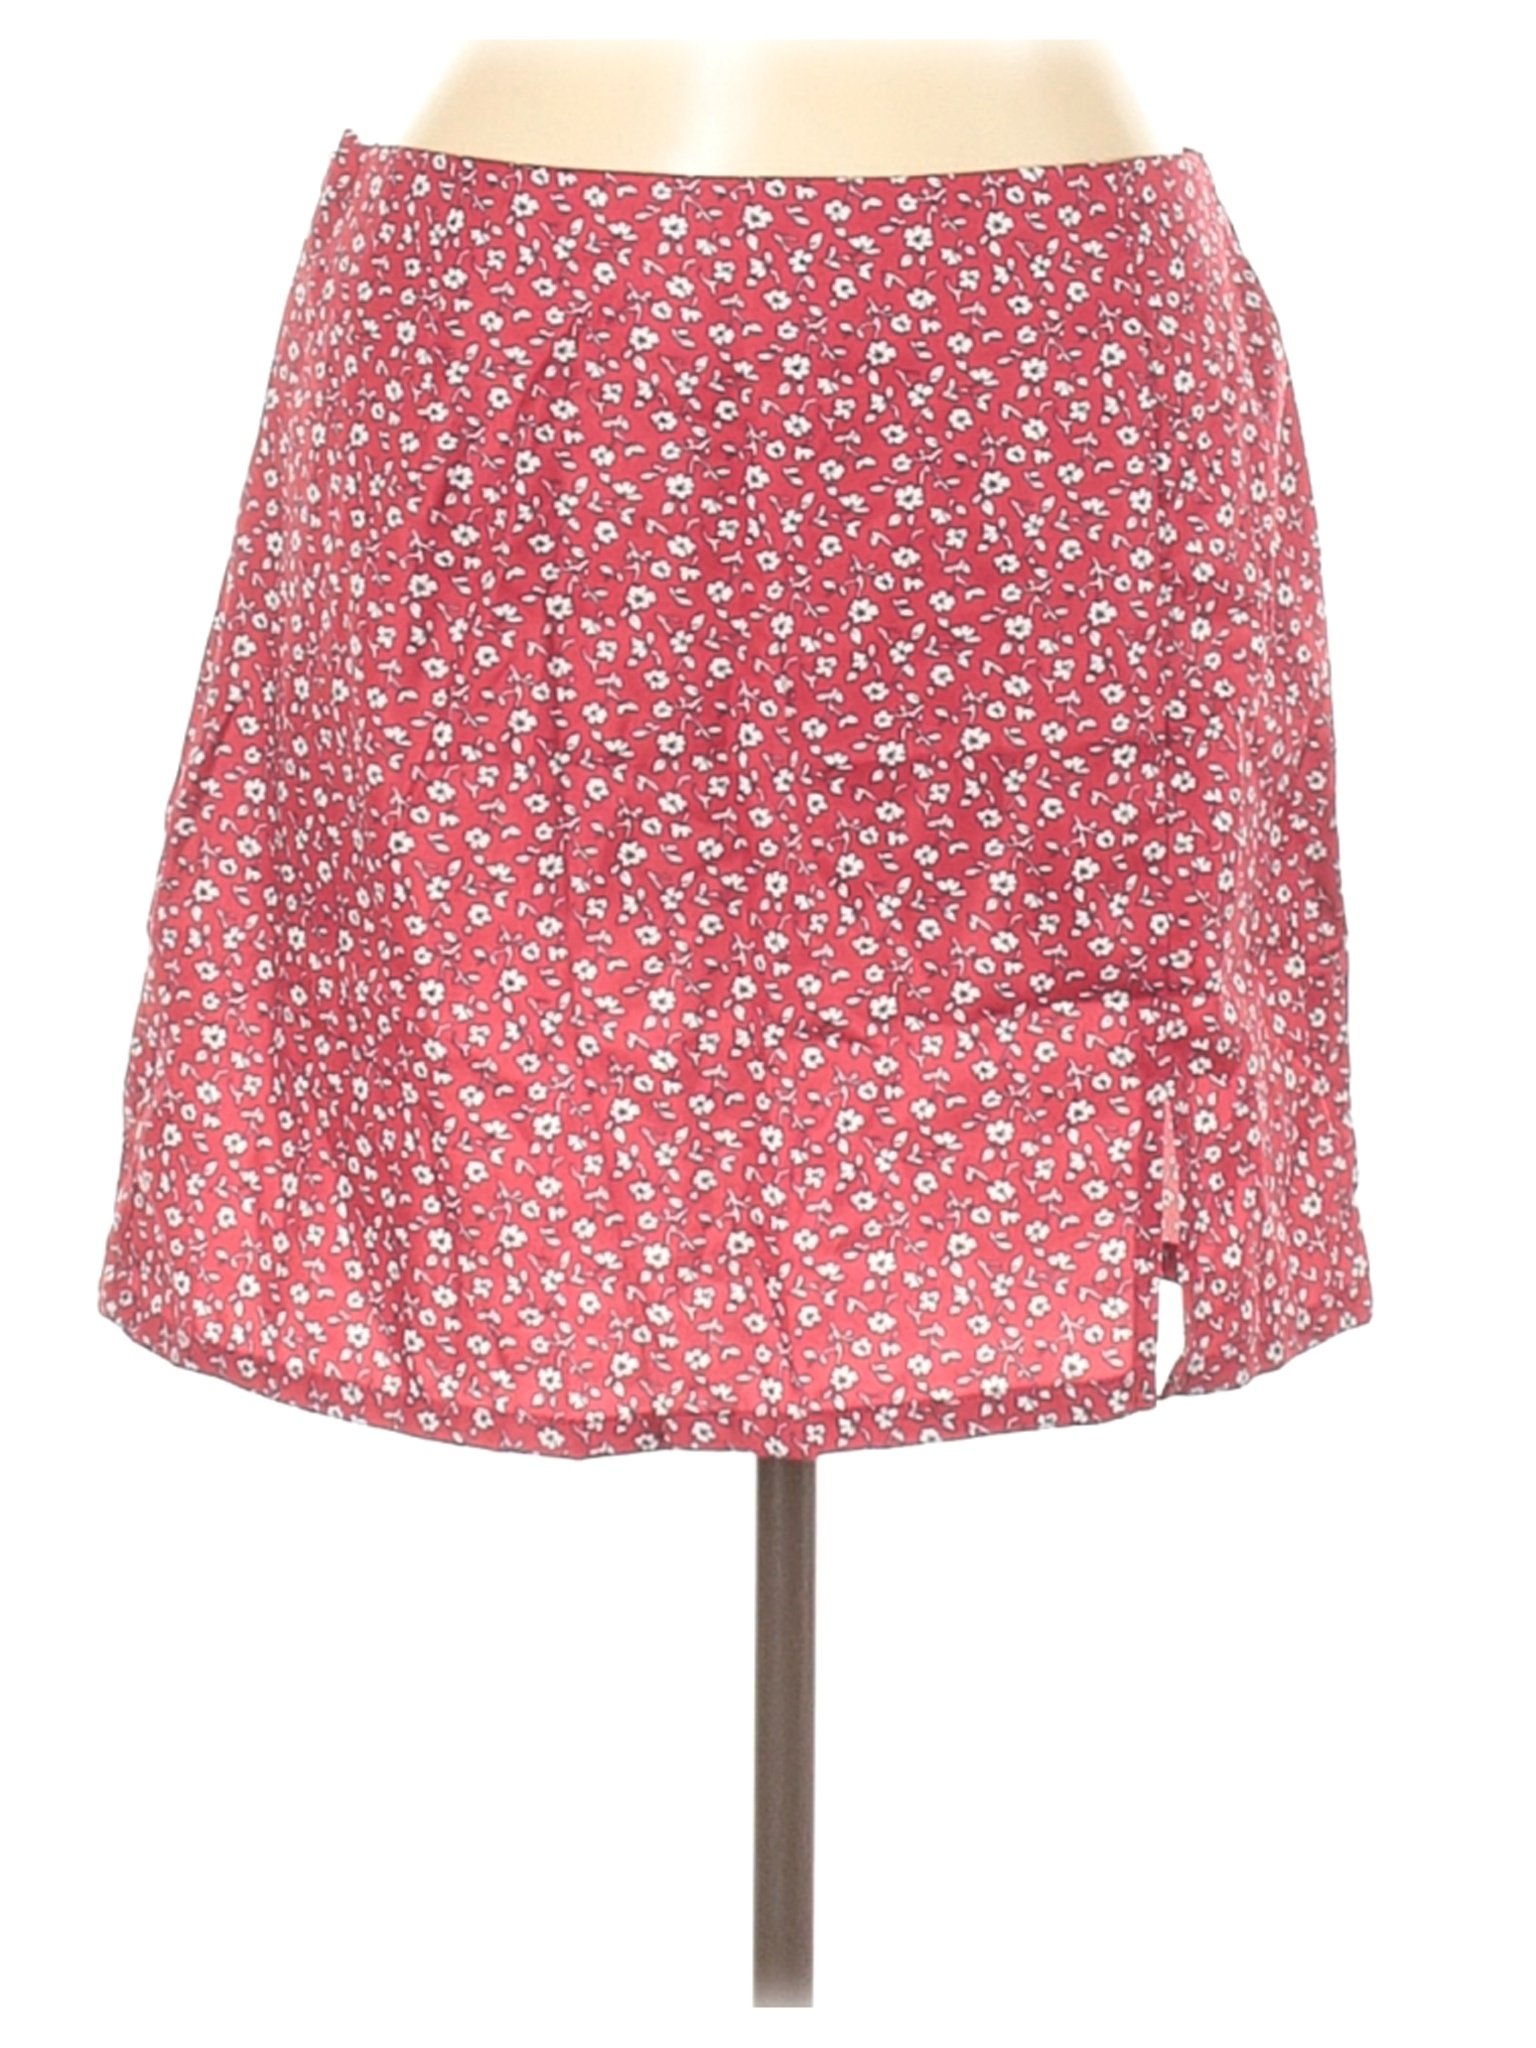 Shein Women Pink Casual Skirt L | eBay